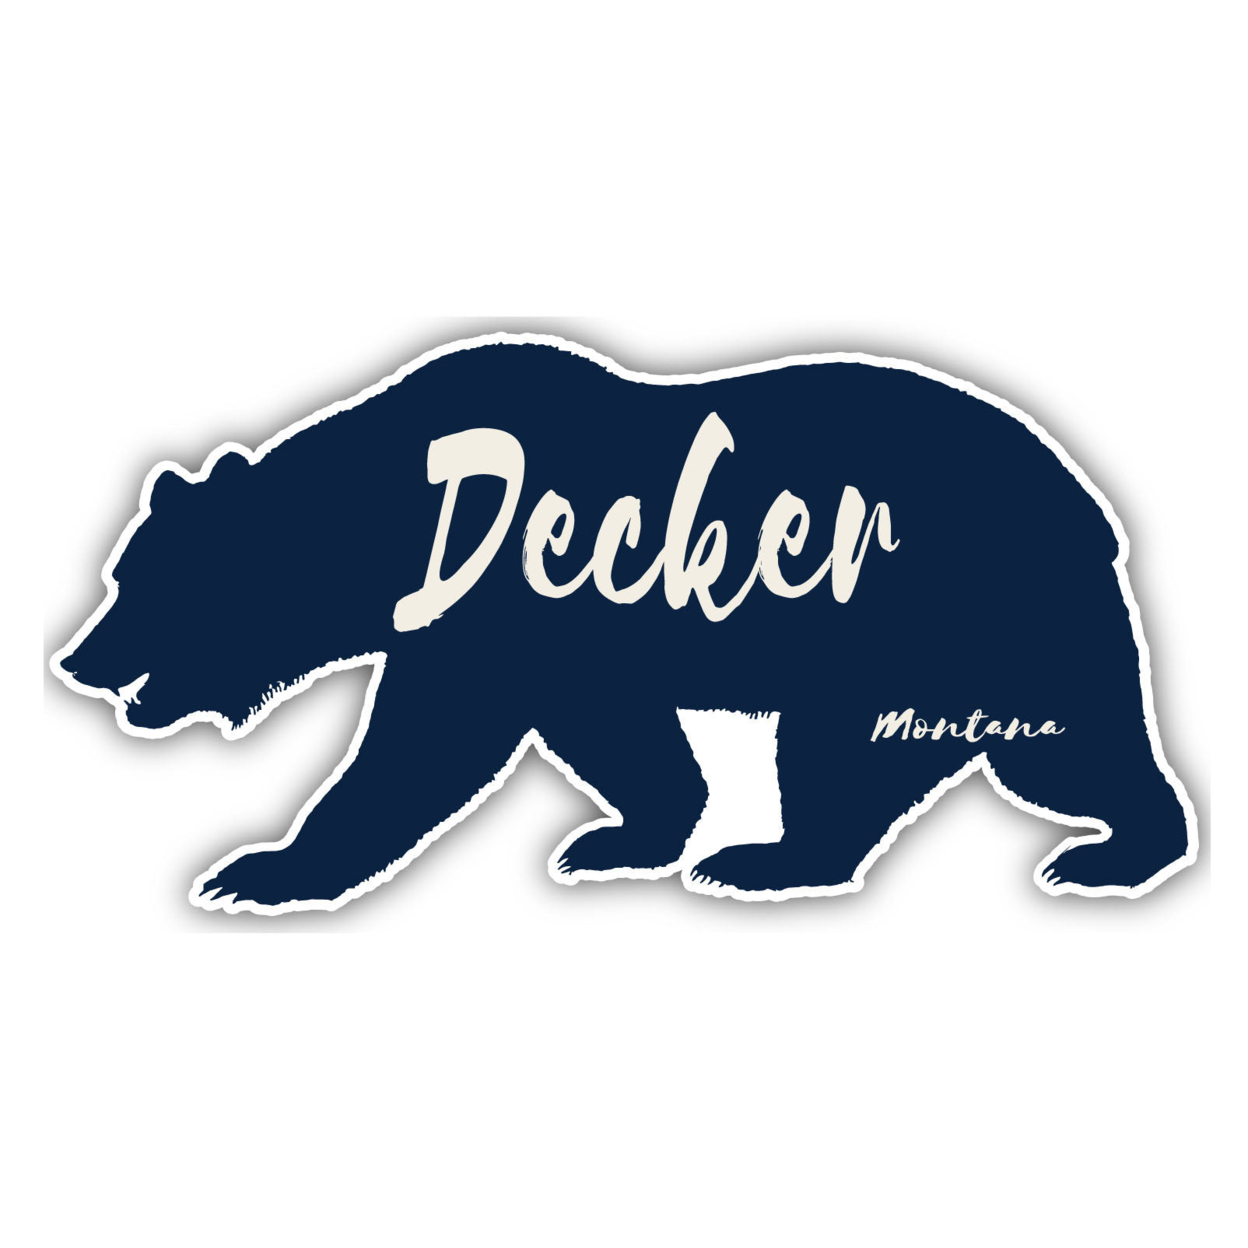 Decker Montana Souvenir Decorative Stickers (Choose Theme And Size) - 4-Pack, 2-Inch, Bear